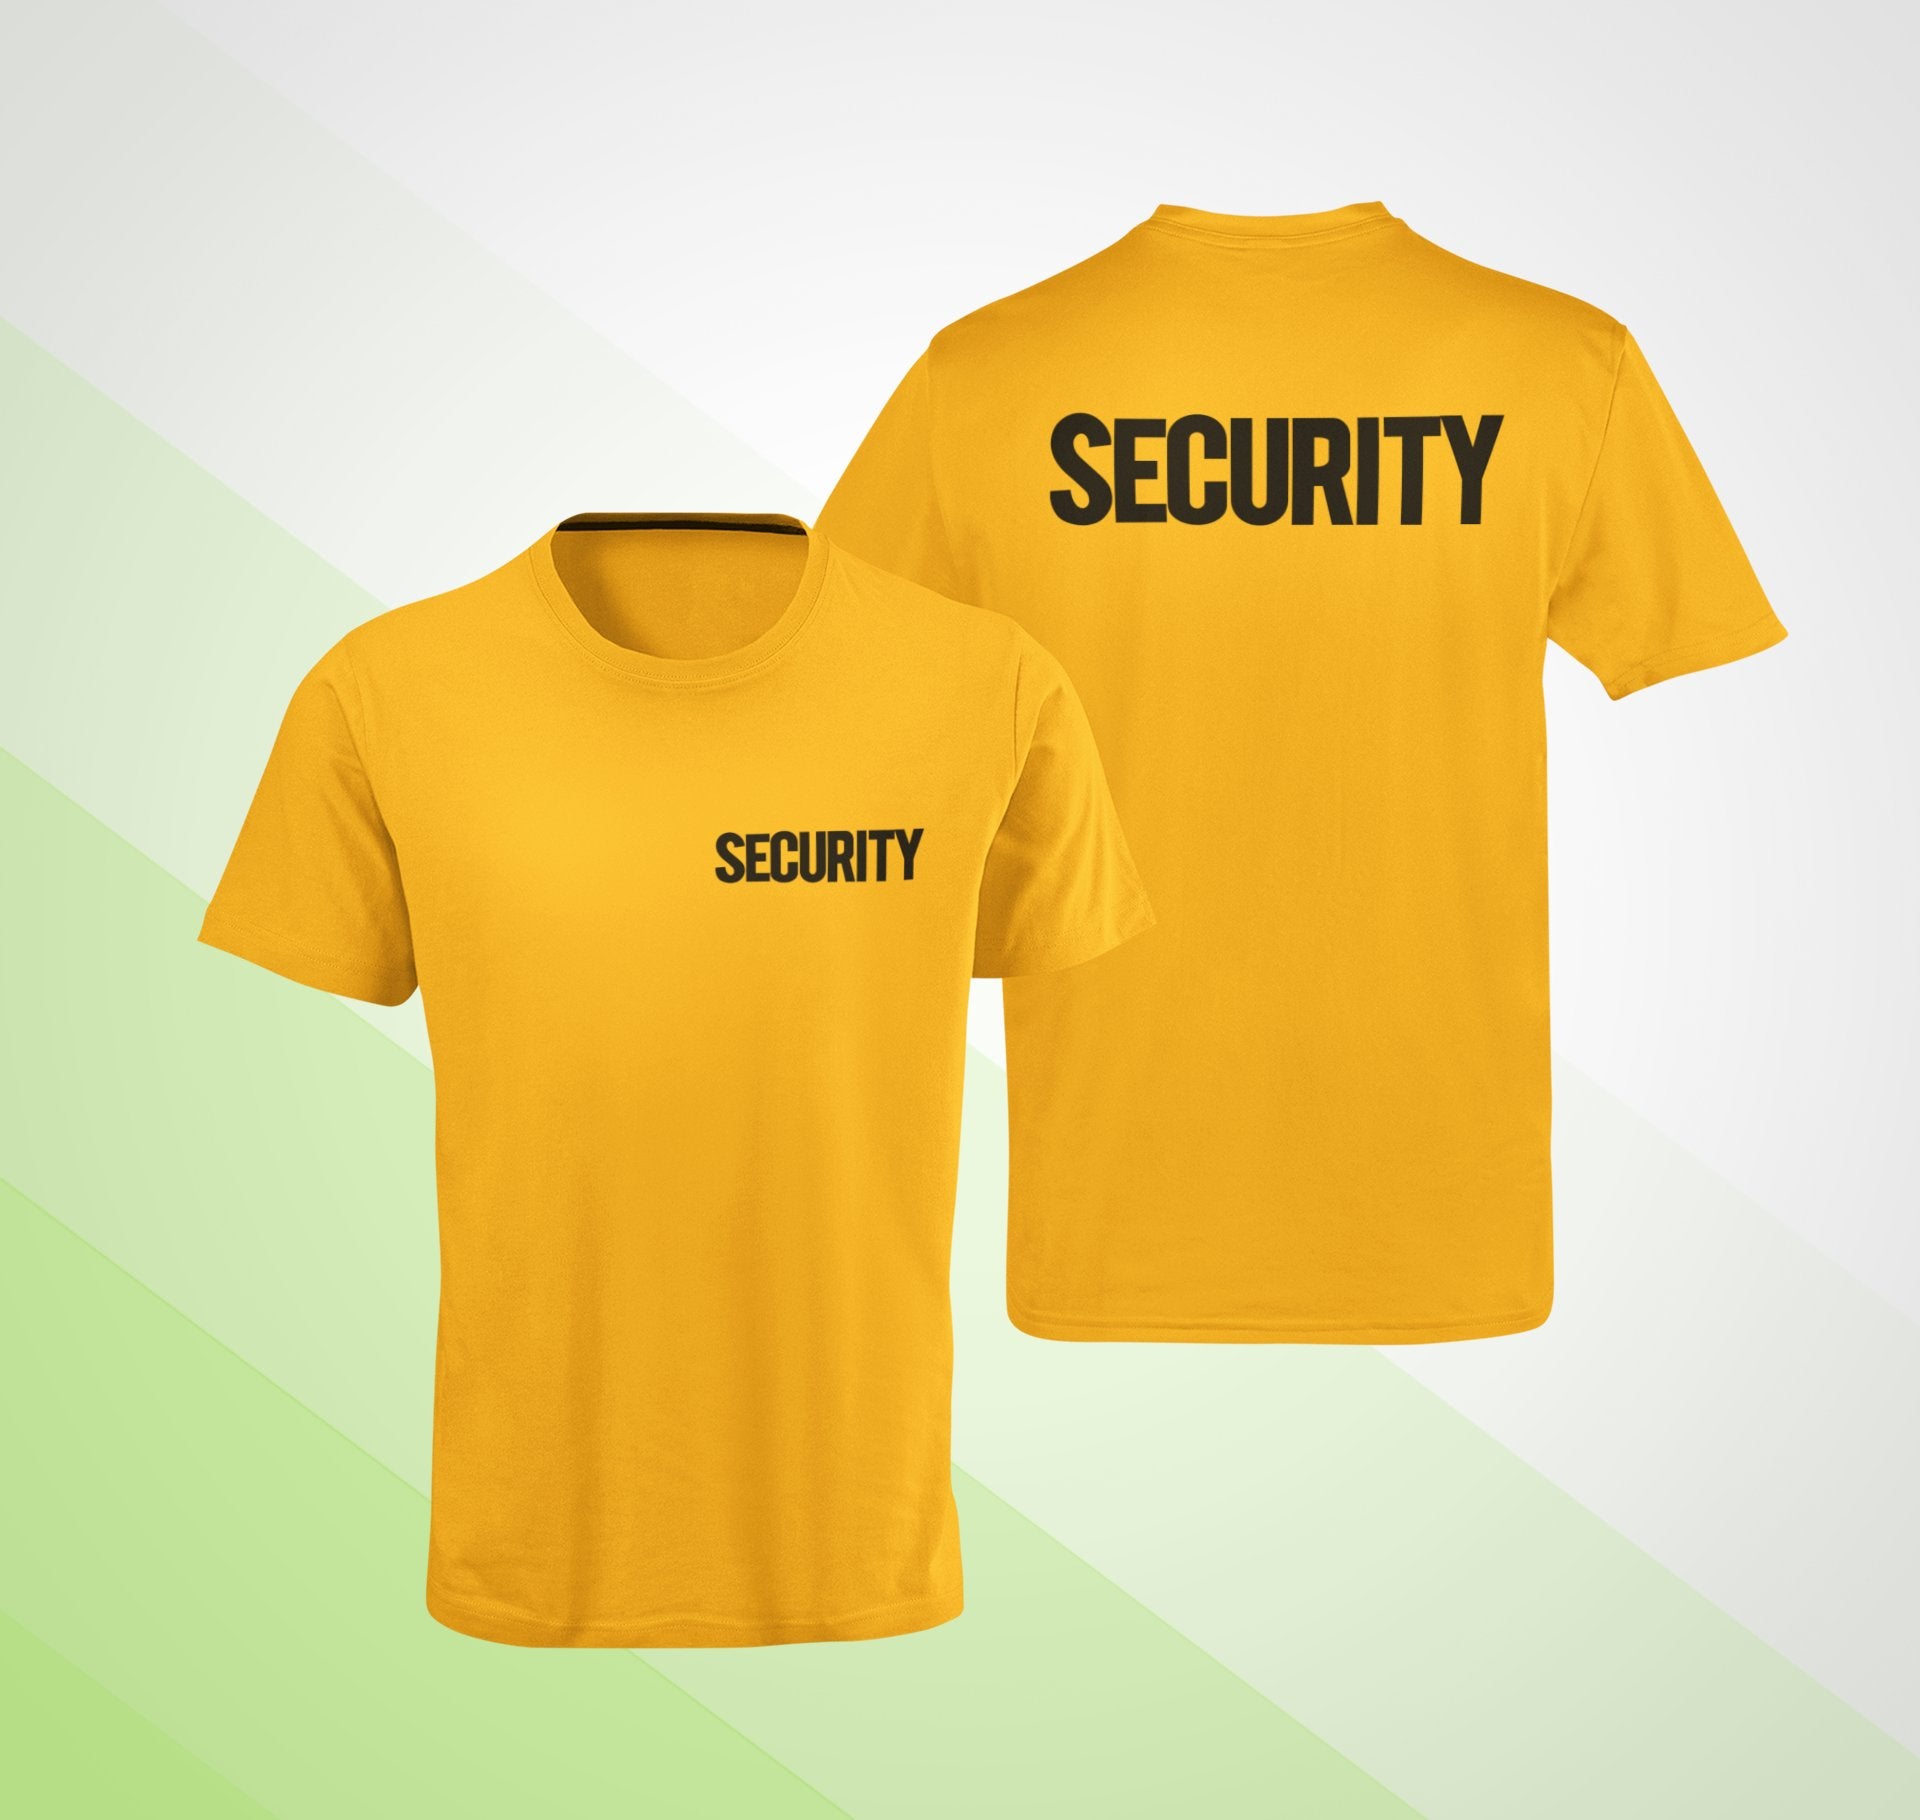 Men's Security T-Shirt (Chest & Back Print, Gold / Black)